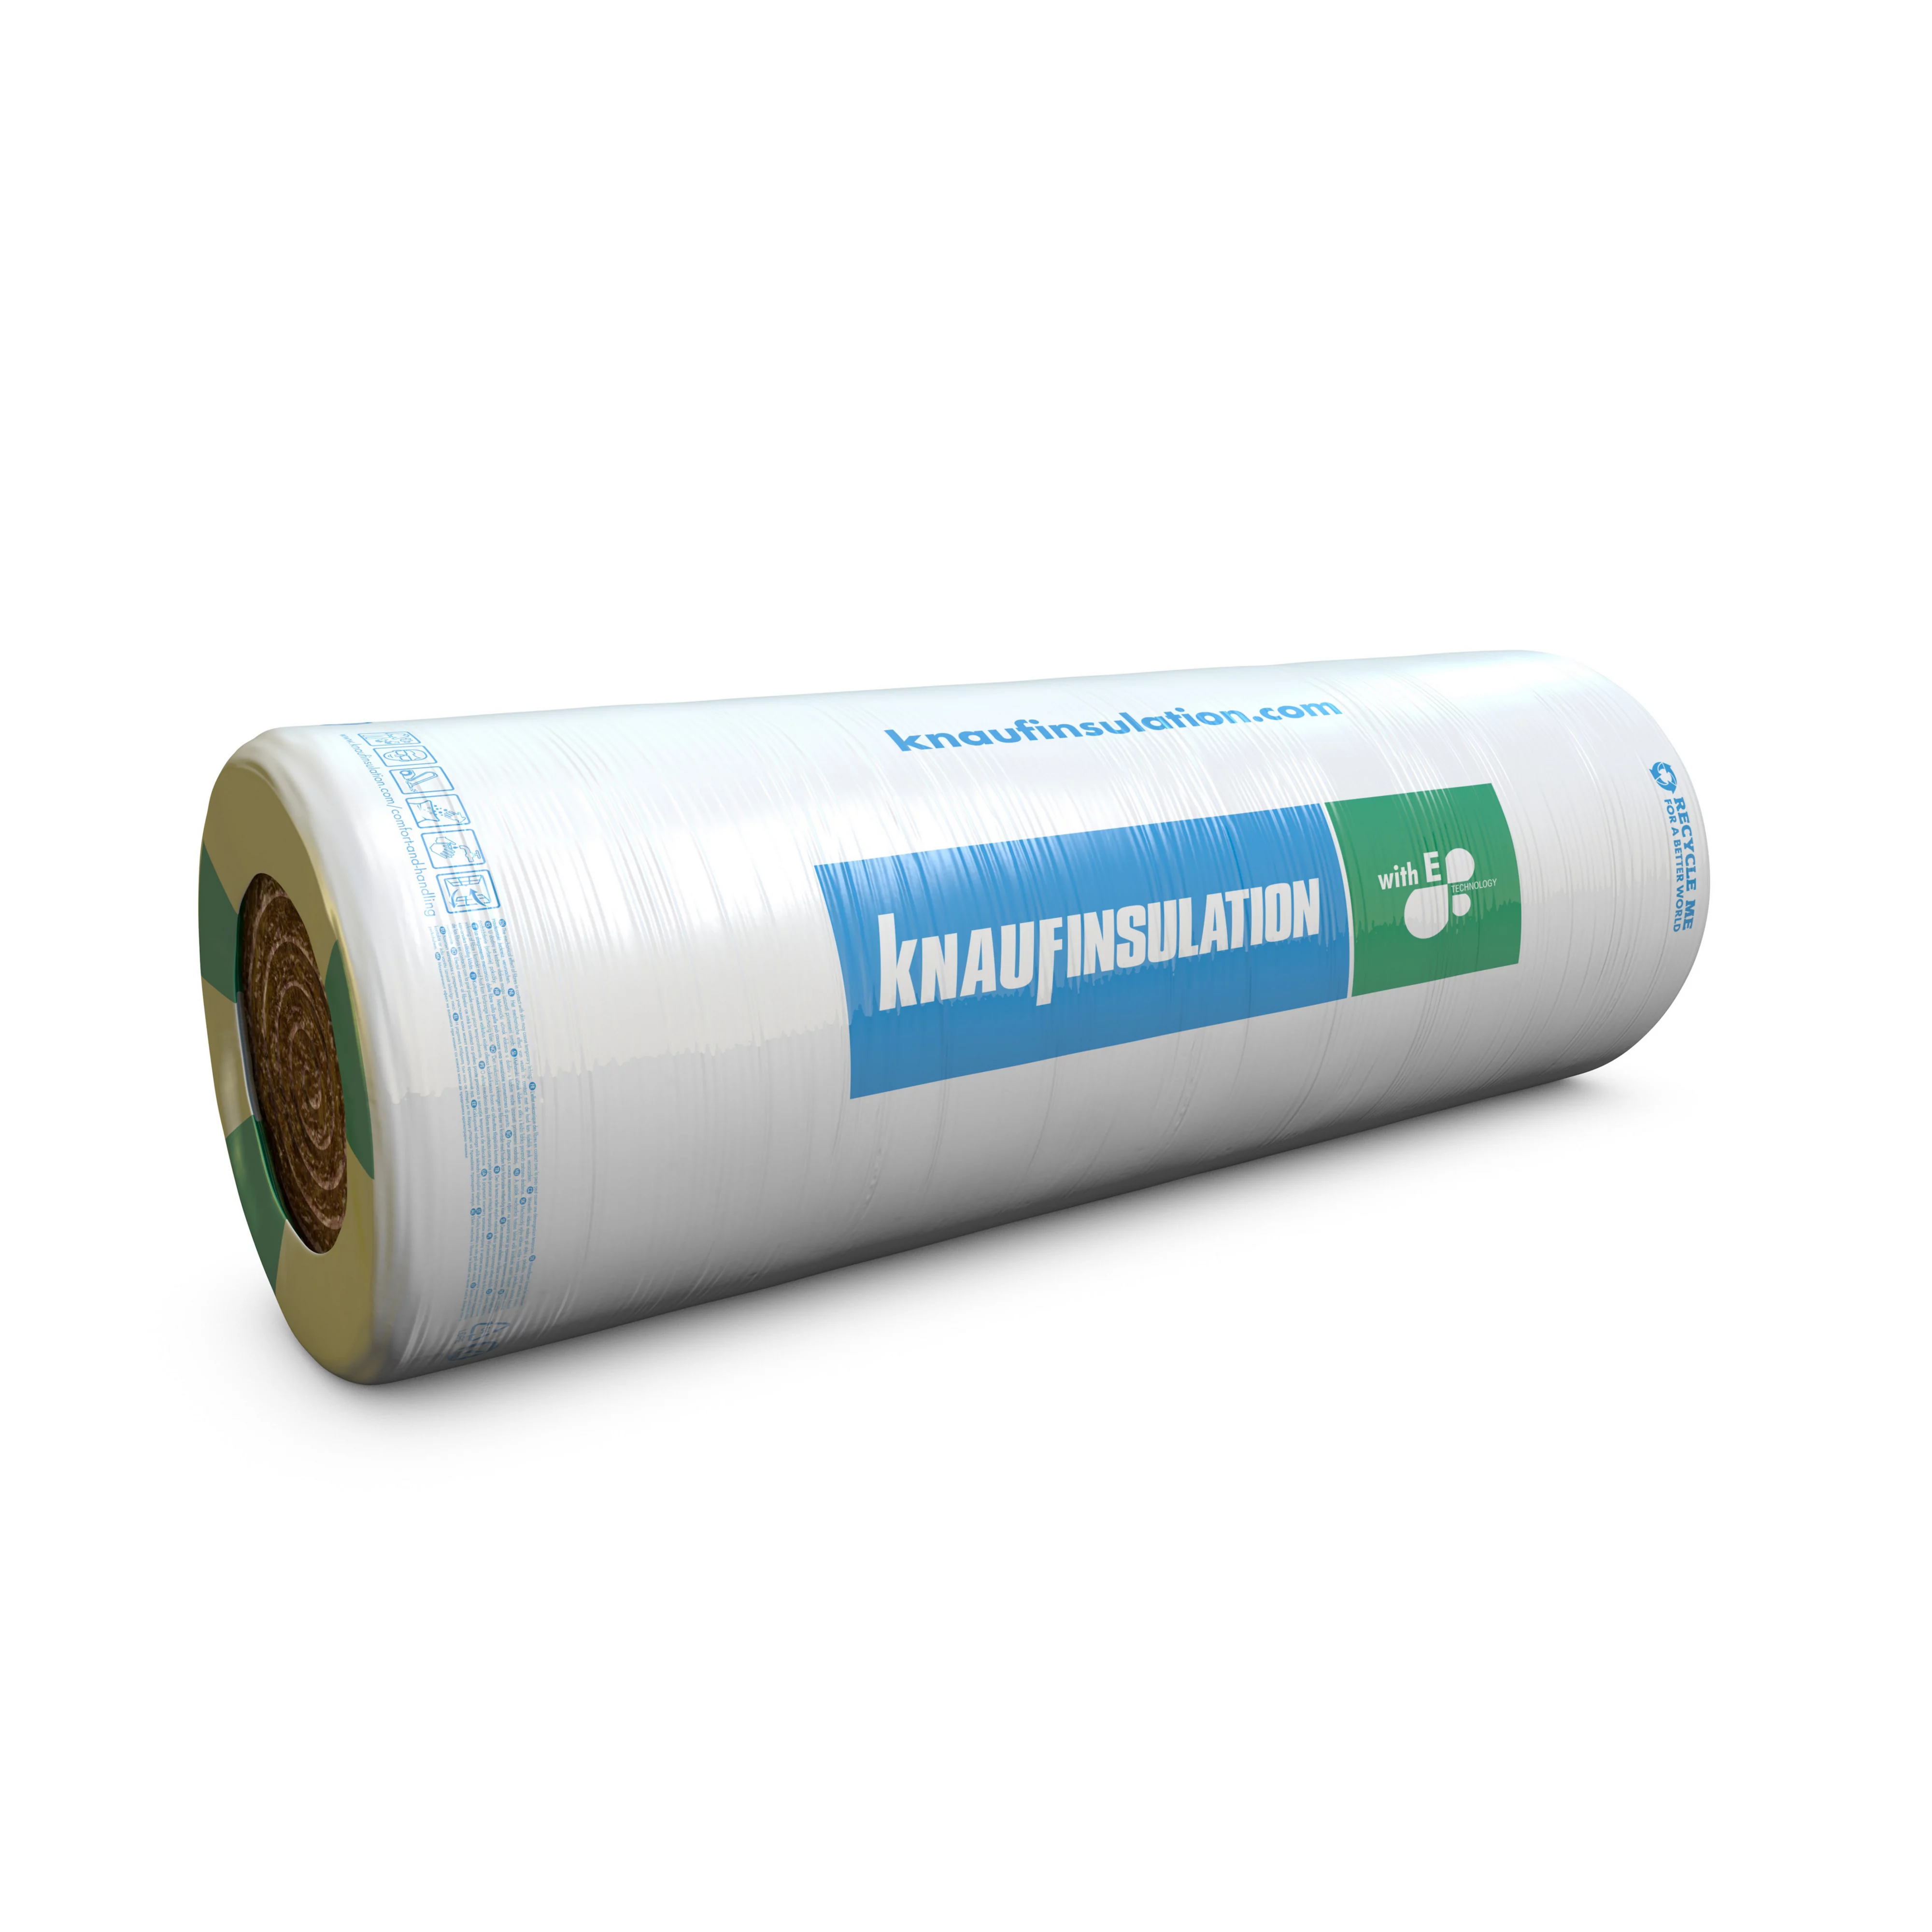 KICM Spanish Green Roll Packaging Angled.jpg